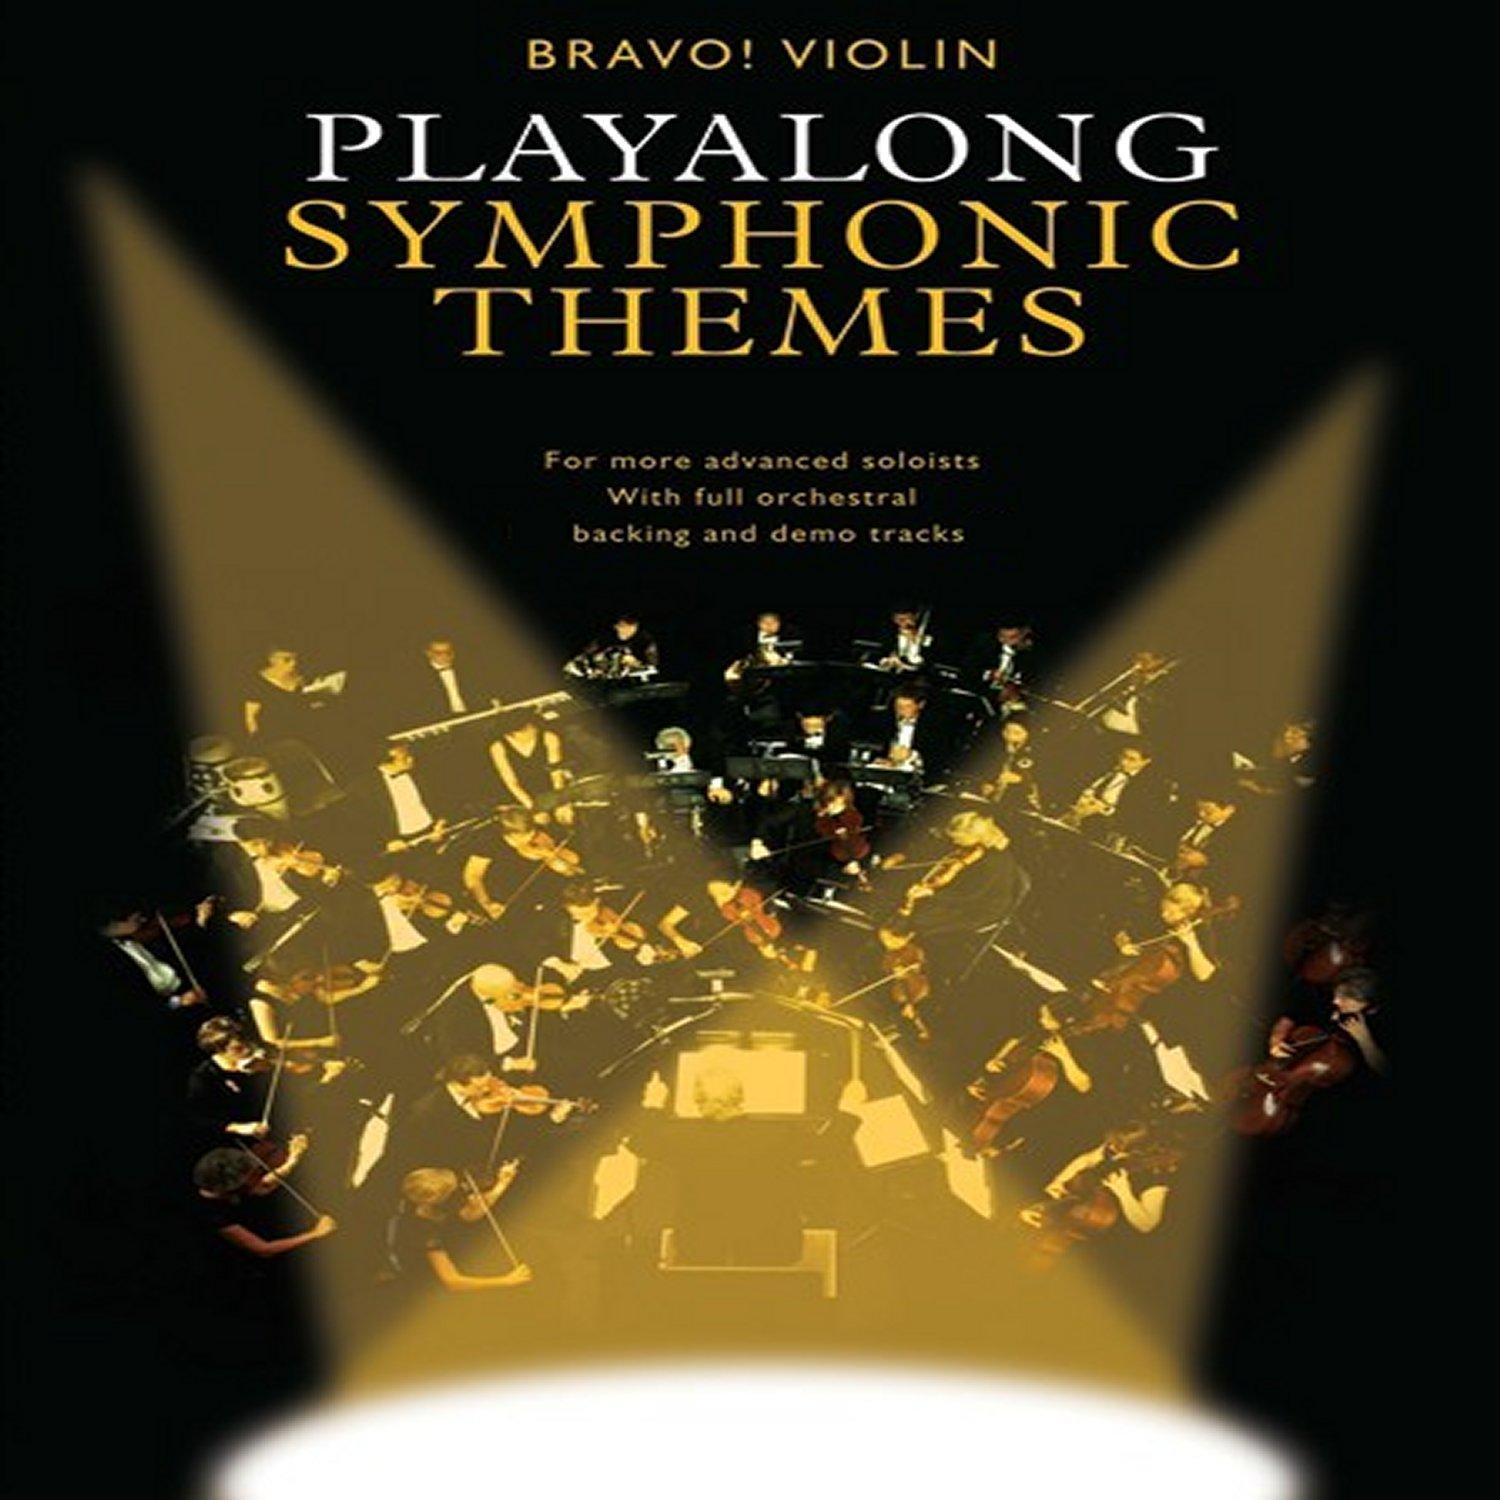 Bravo! Violin Playalong Symphonic Themes